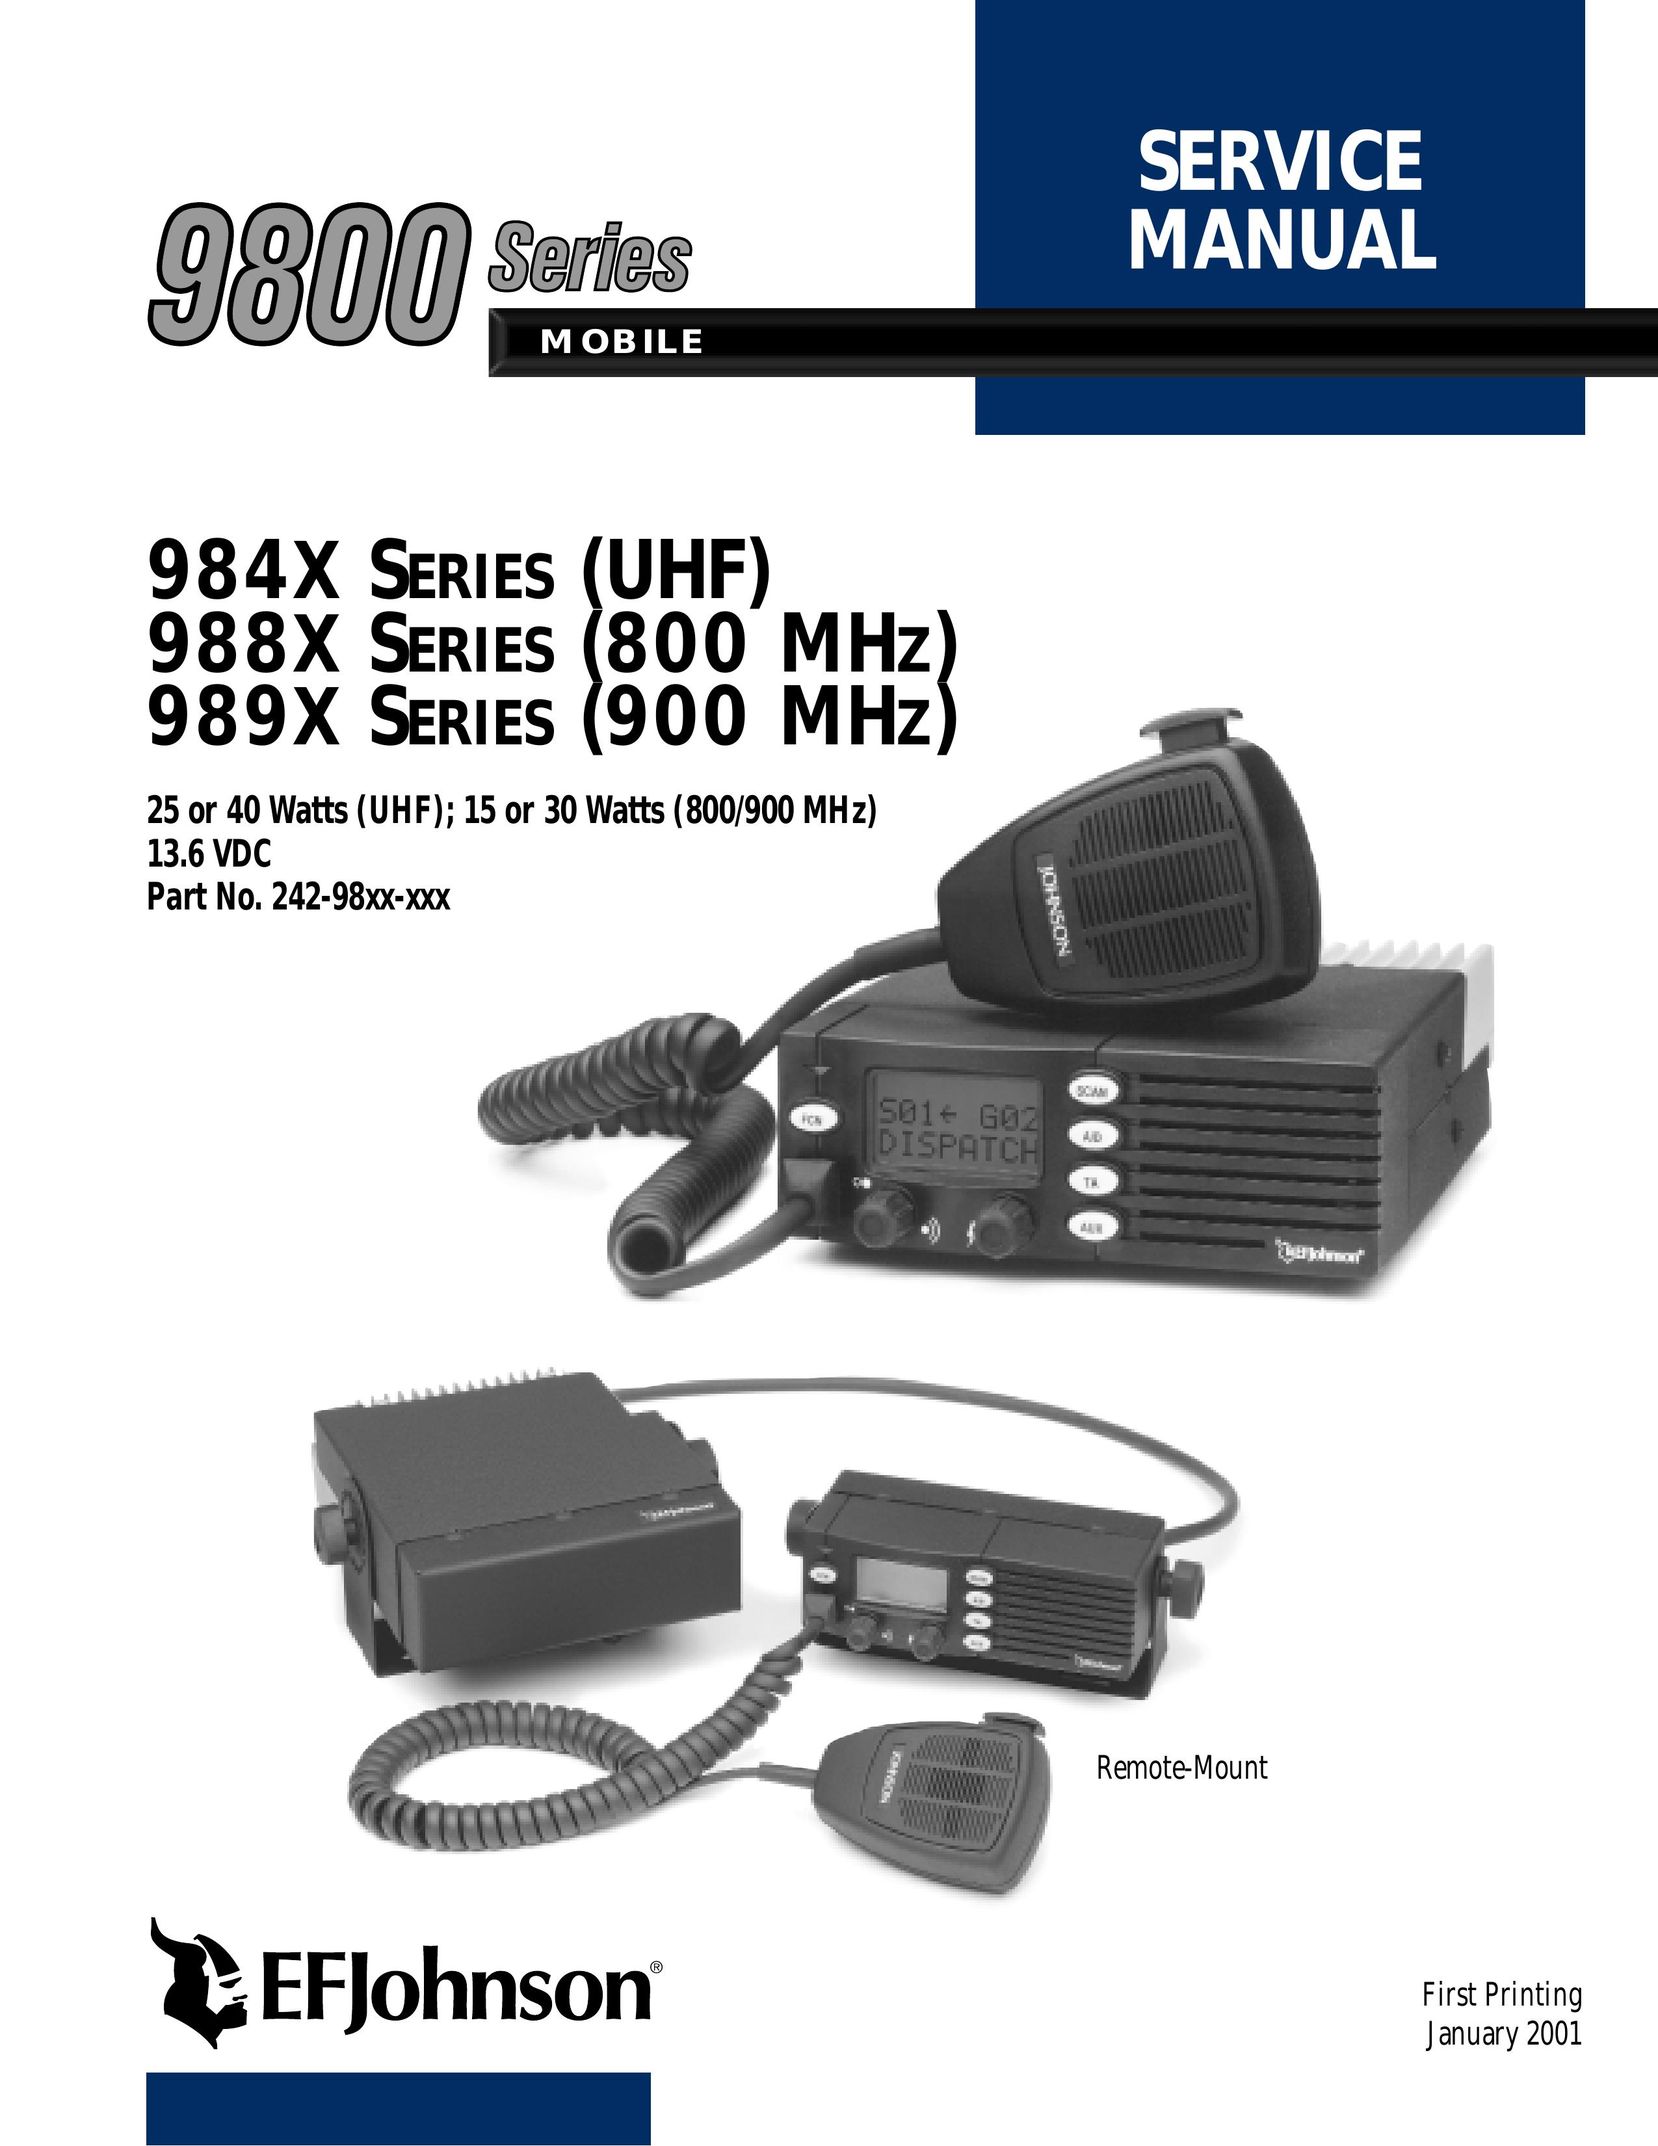 EFJohnson 989X SERIES Two-Way Radio User Manual